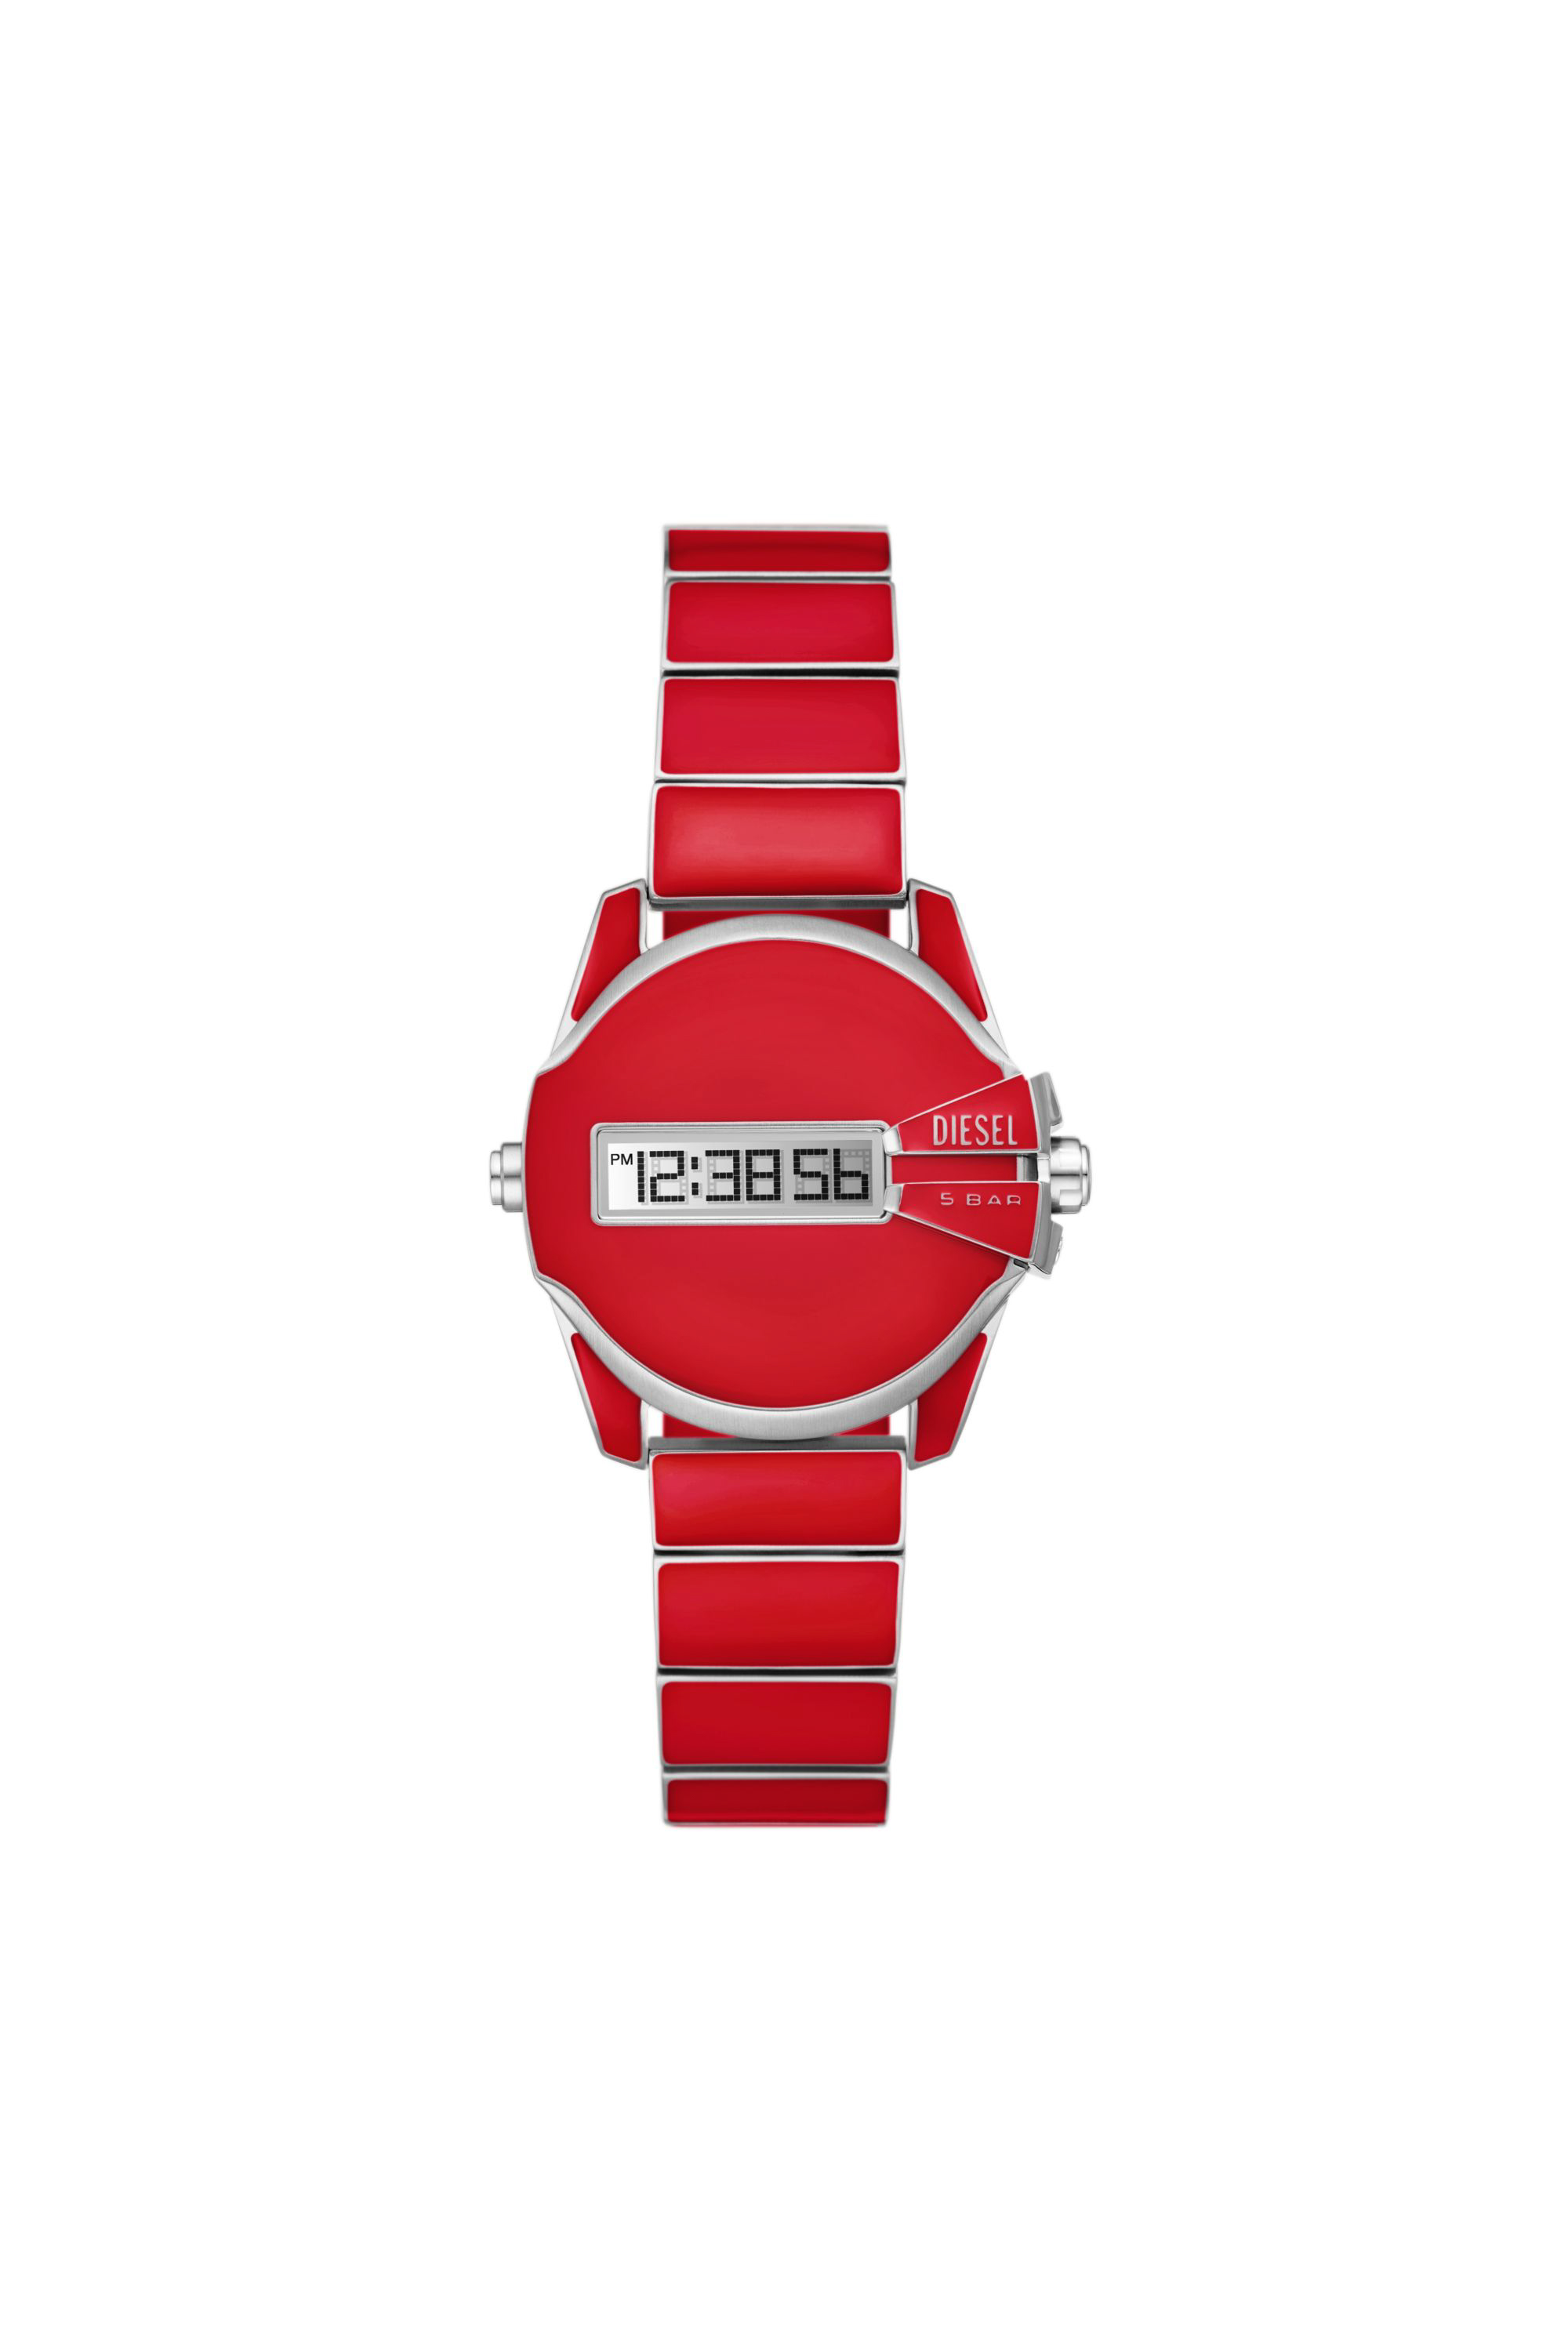 Diesel - DZ2192, Unisex Baby Chief Digital red enamel and stainless steel watch in Red - Image 1